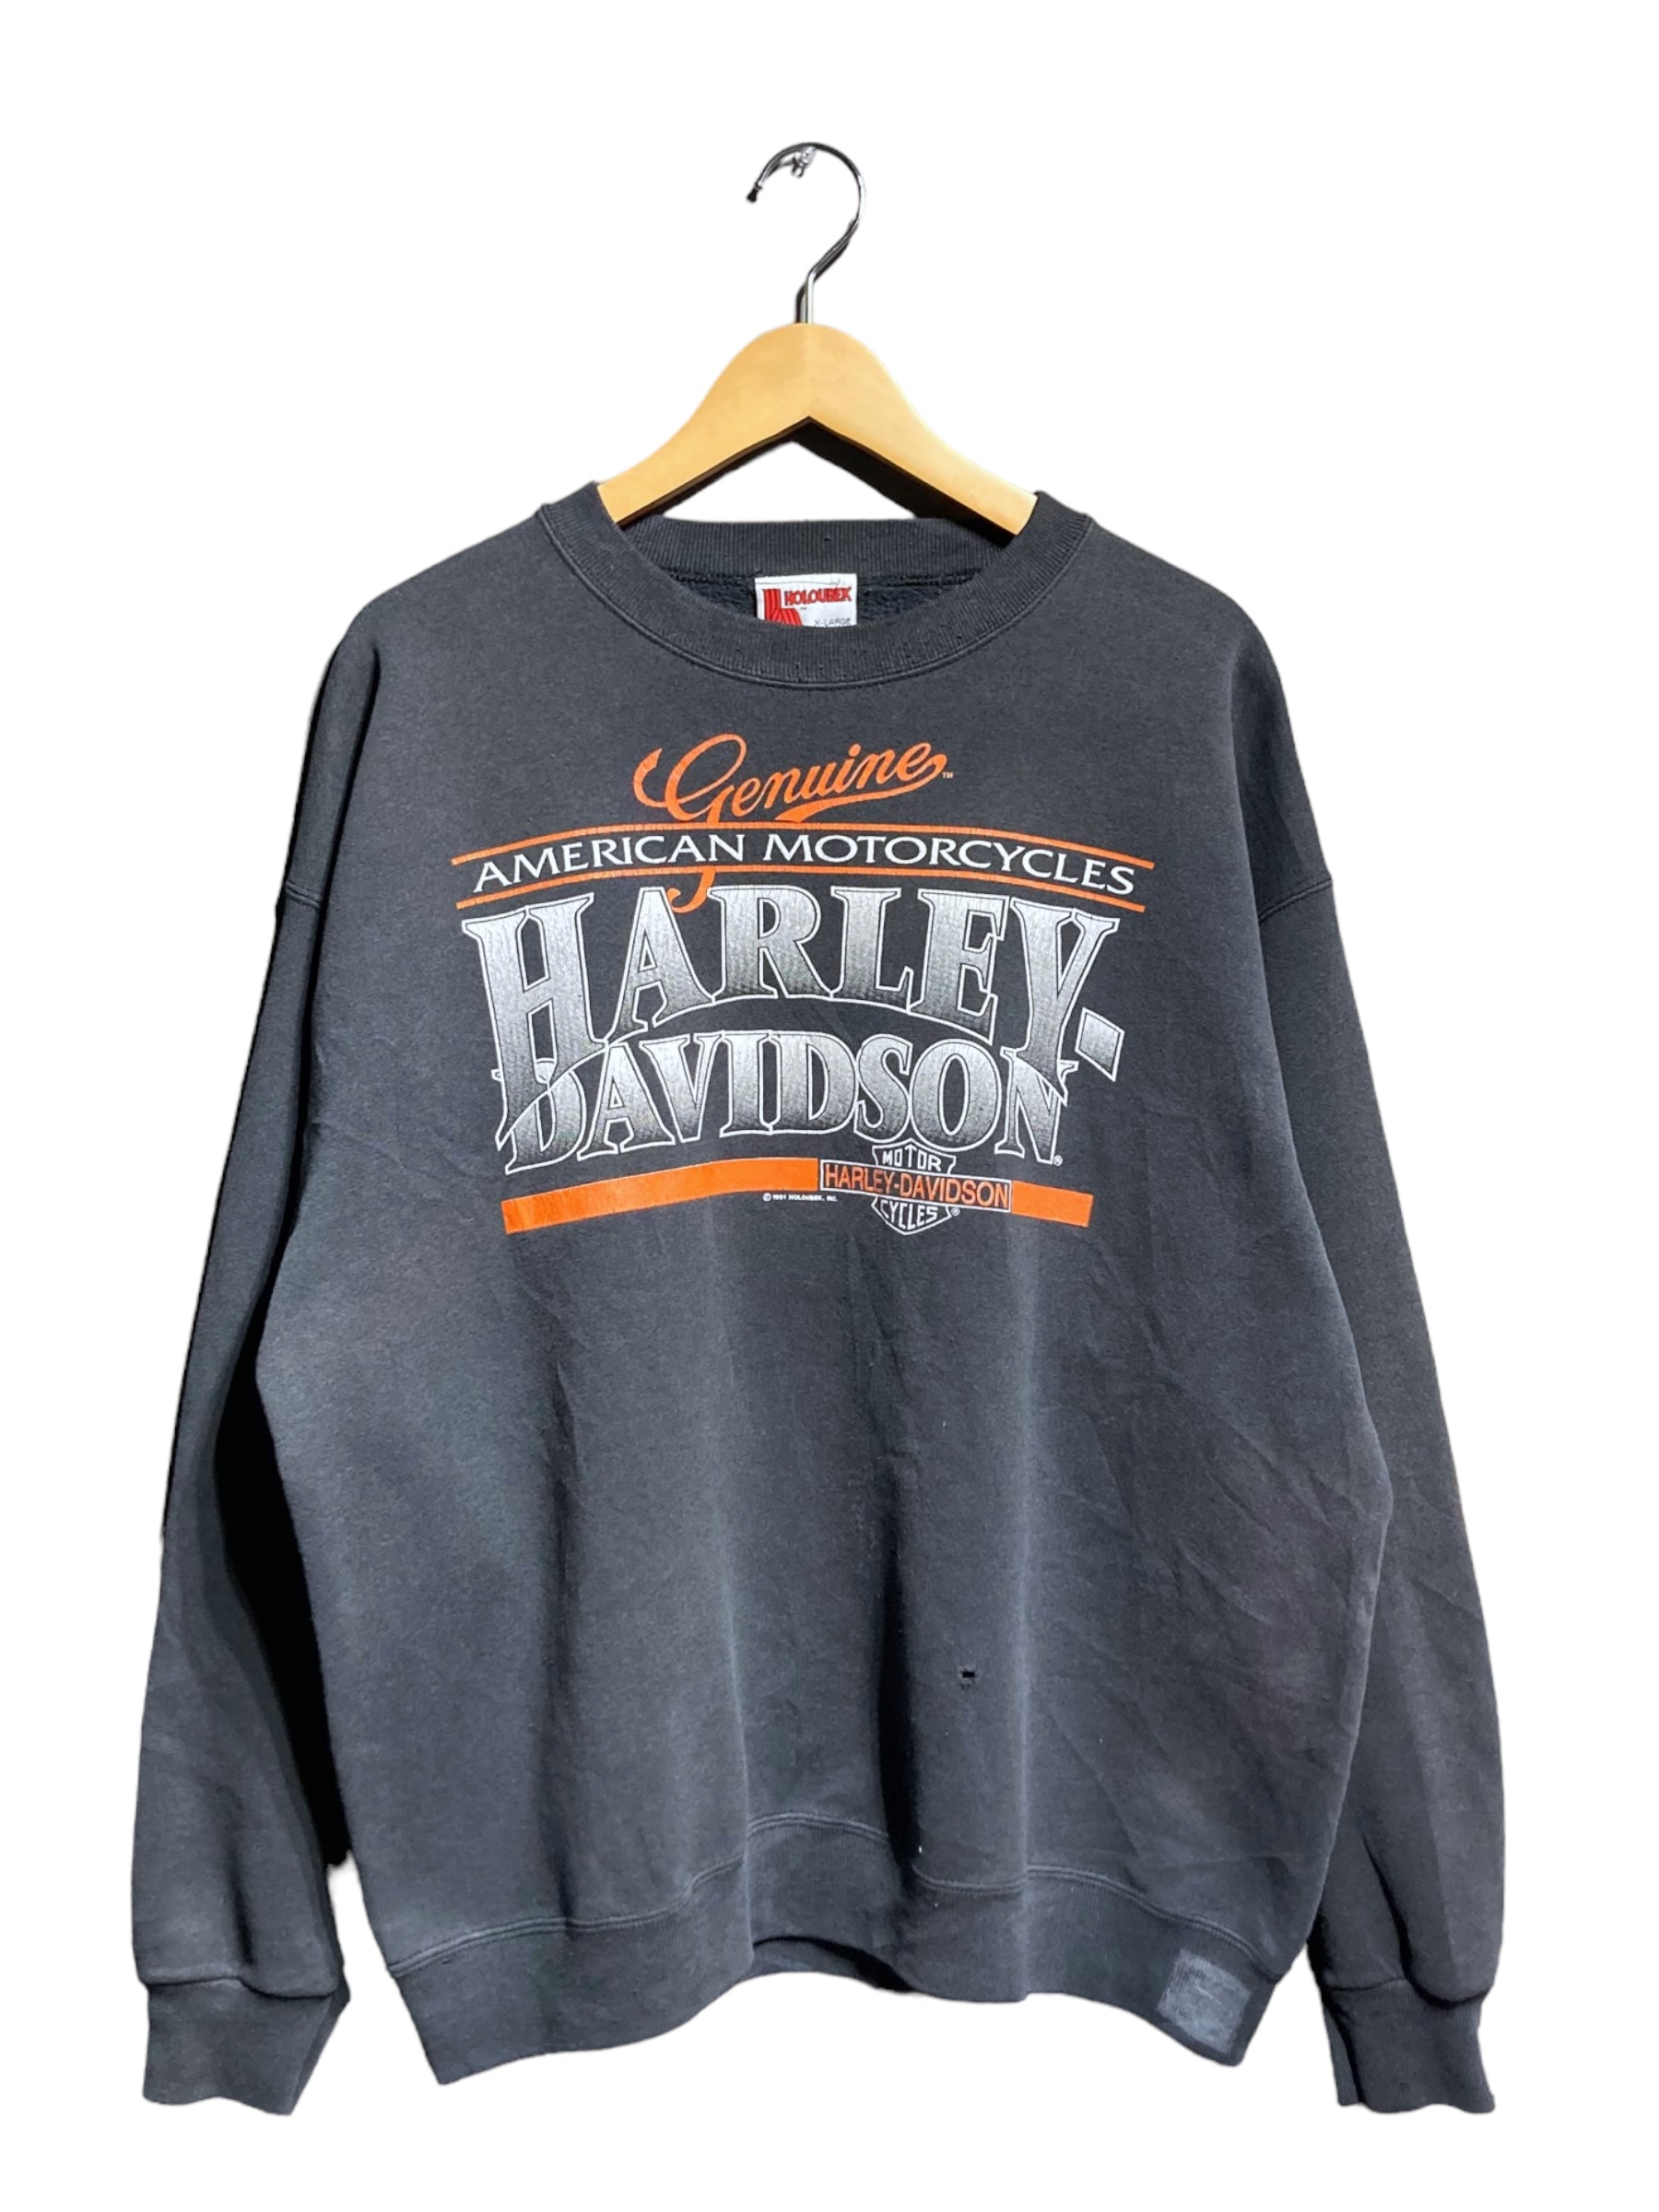 Harley Davidson ハーレーダビッドソン HOLOUBEK 90s スウェット